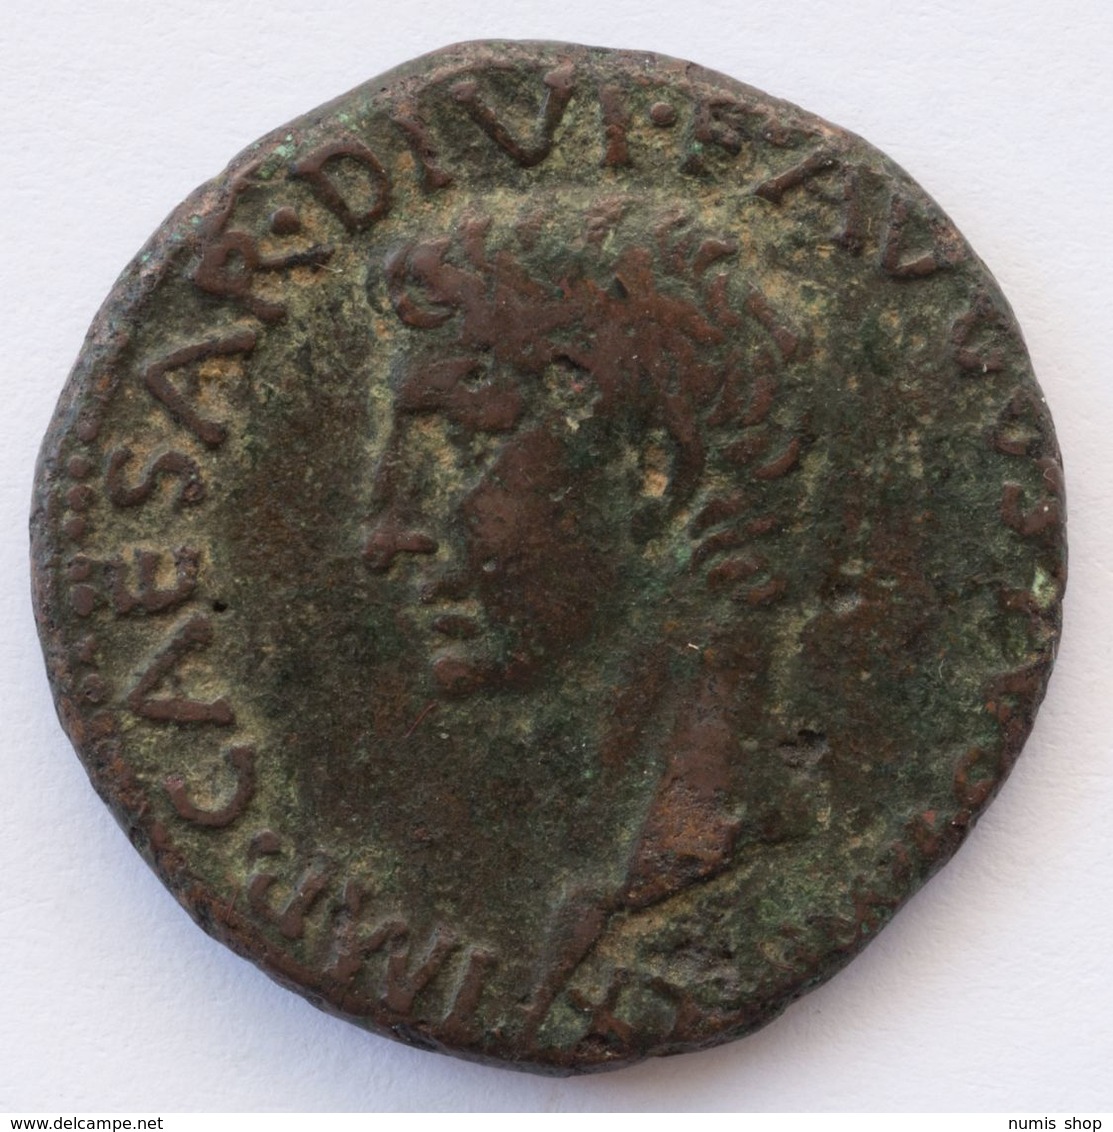 Roman Empire - #124 - Augustus - M SALVIVS OTHO III VIR AAA FF Um SC - VF! *AS* - La Dinastía Julio-Claudia (-27 / 69)